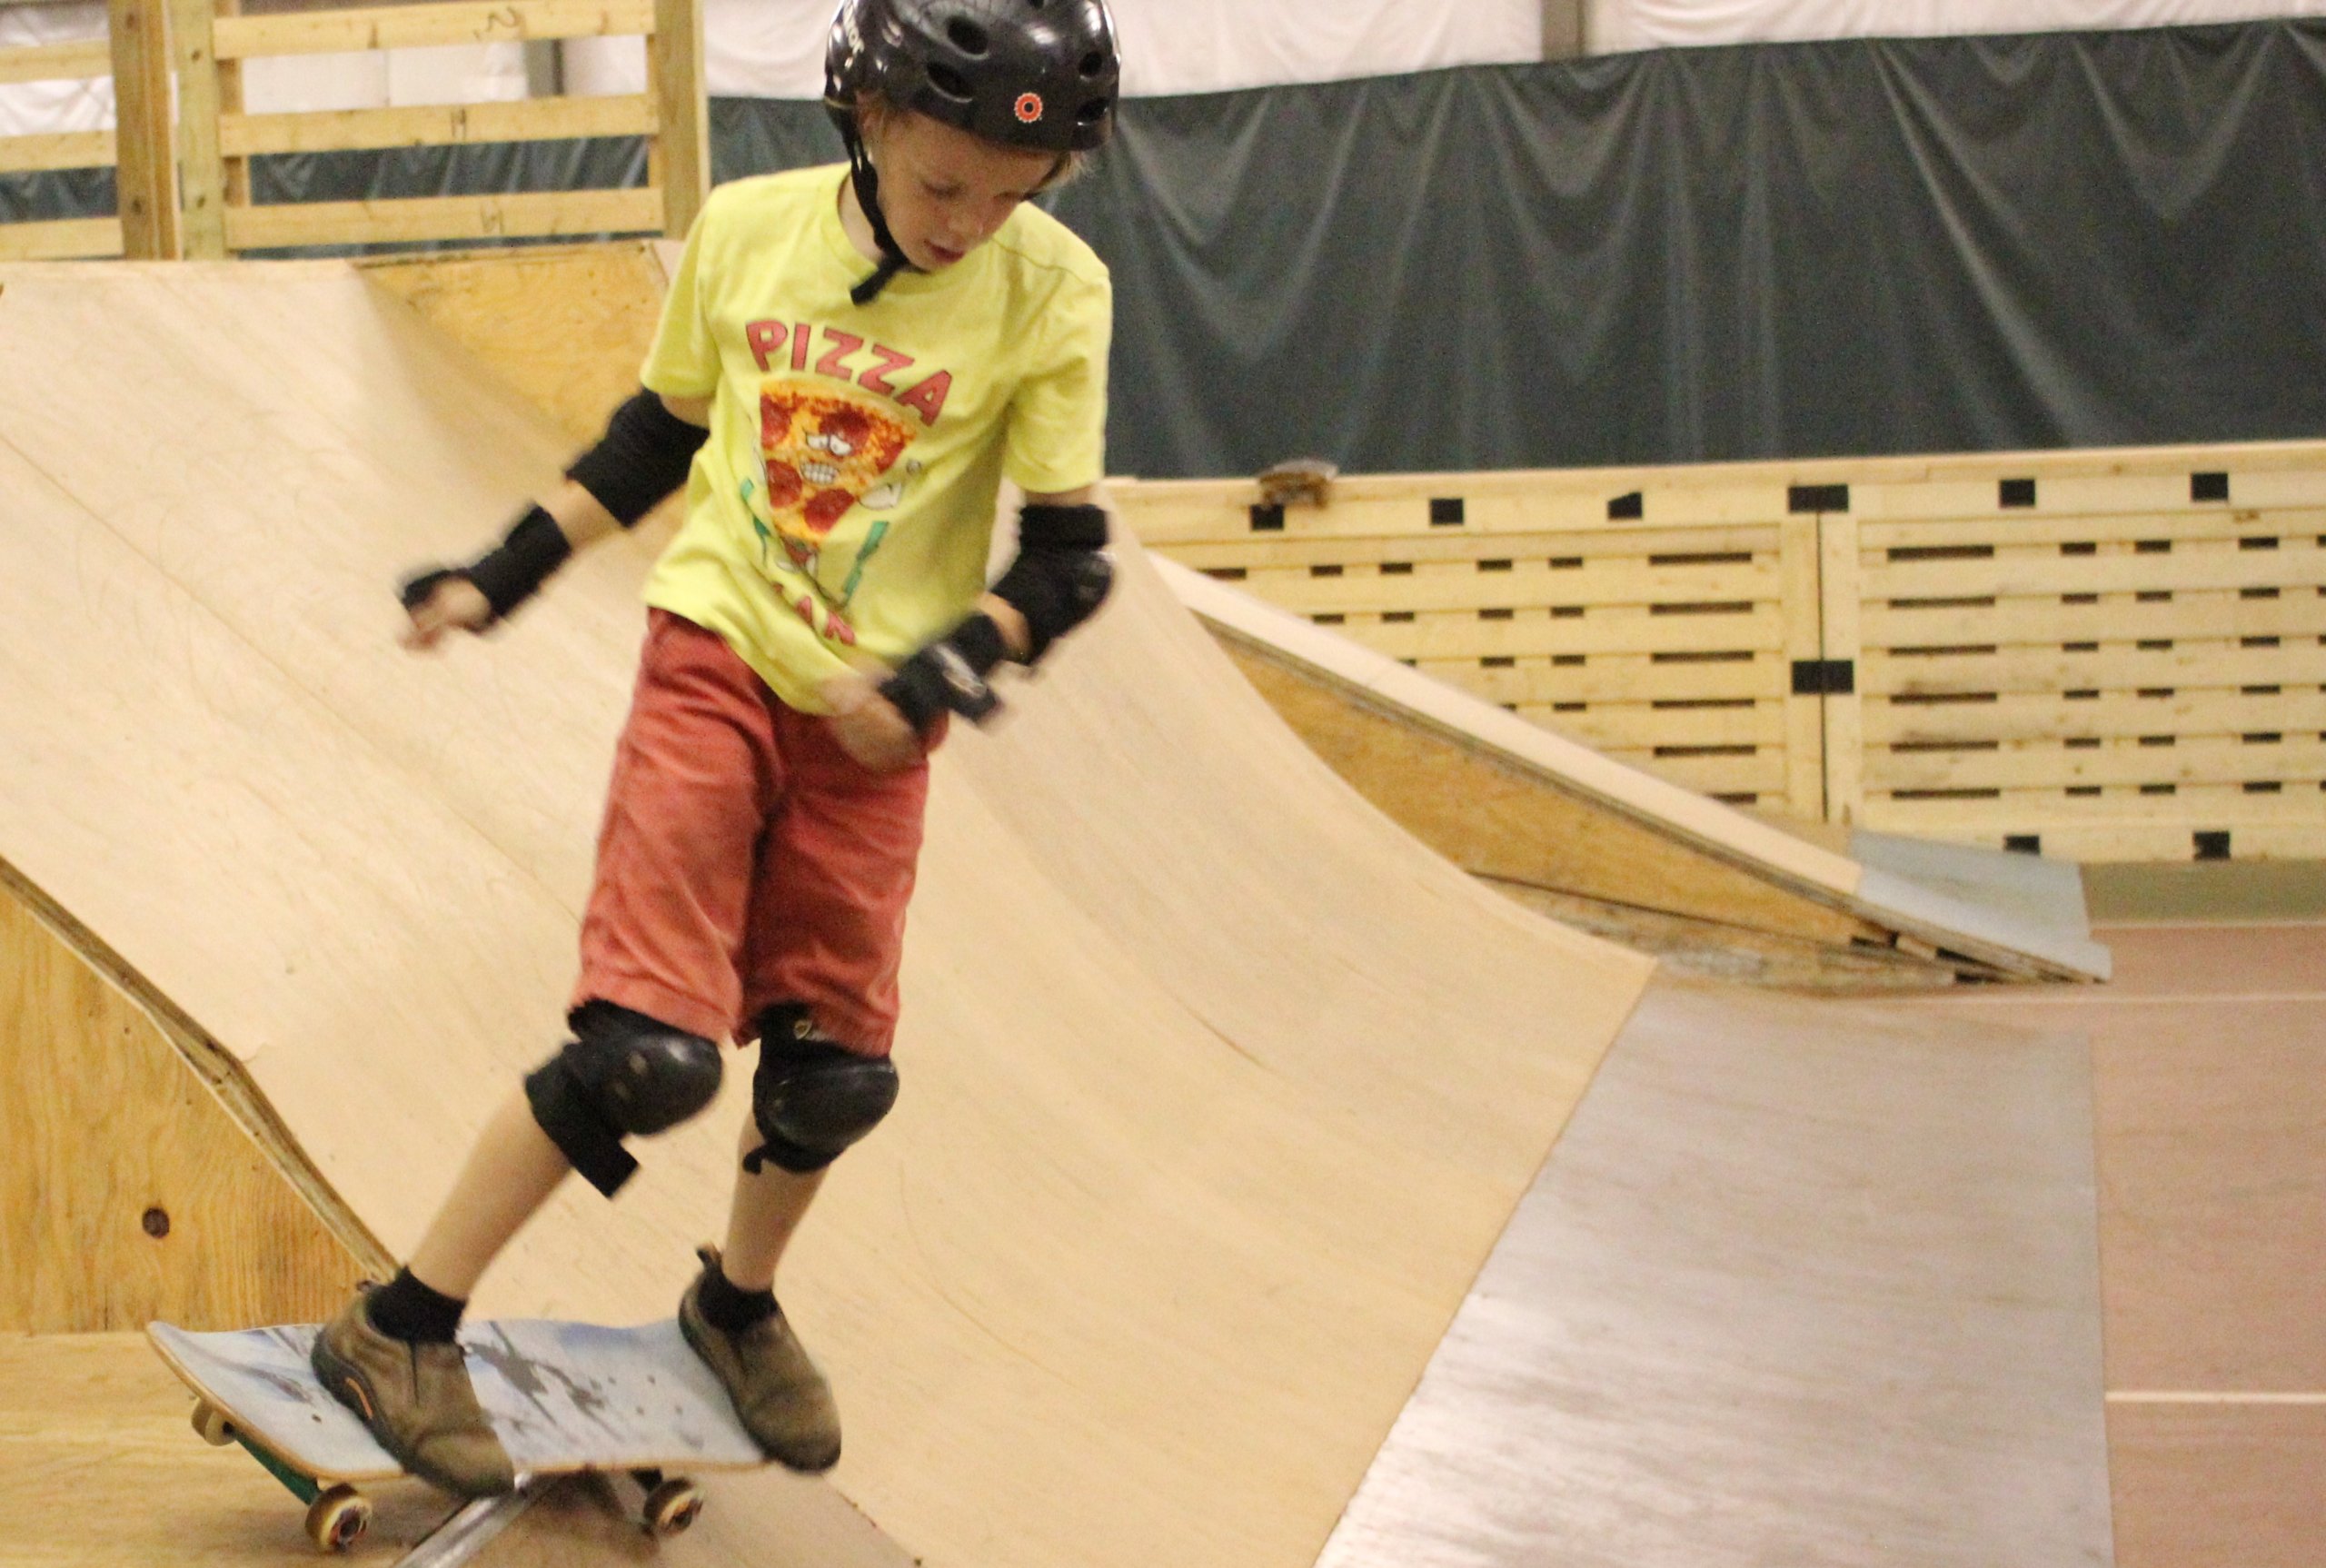 A Kid Skates the Ramp at Bolton Valley's Skate Park